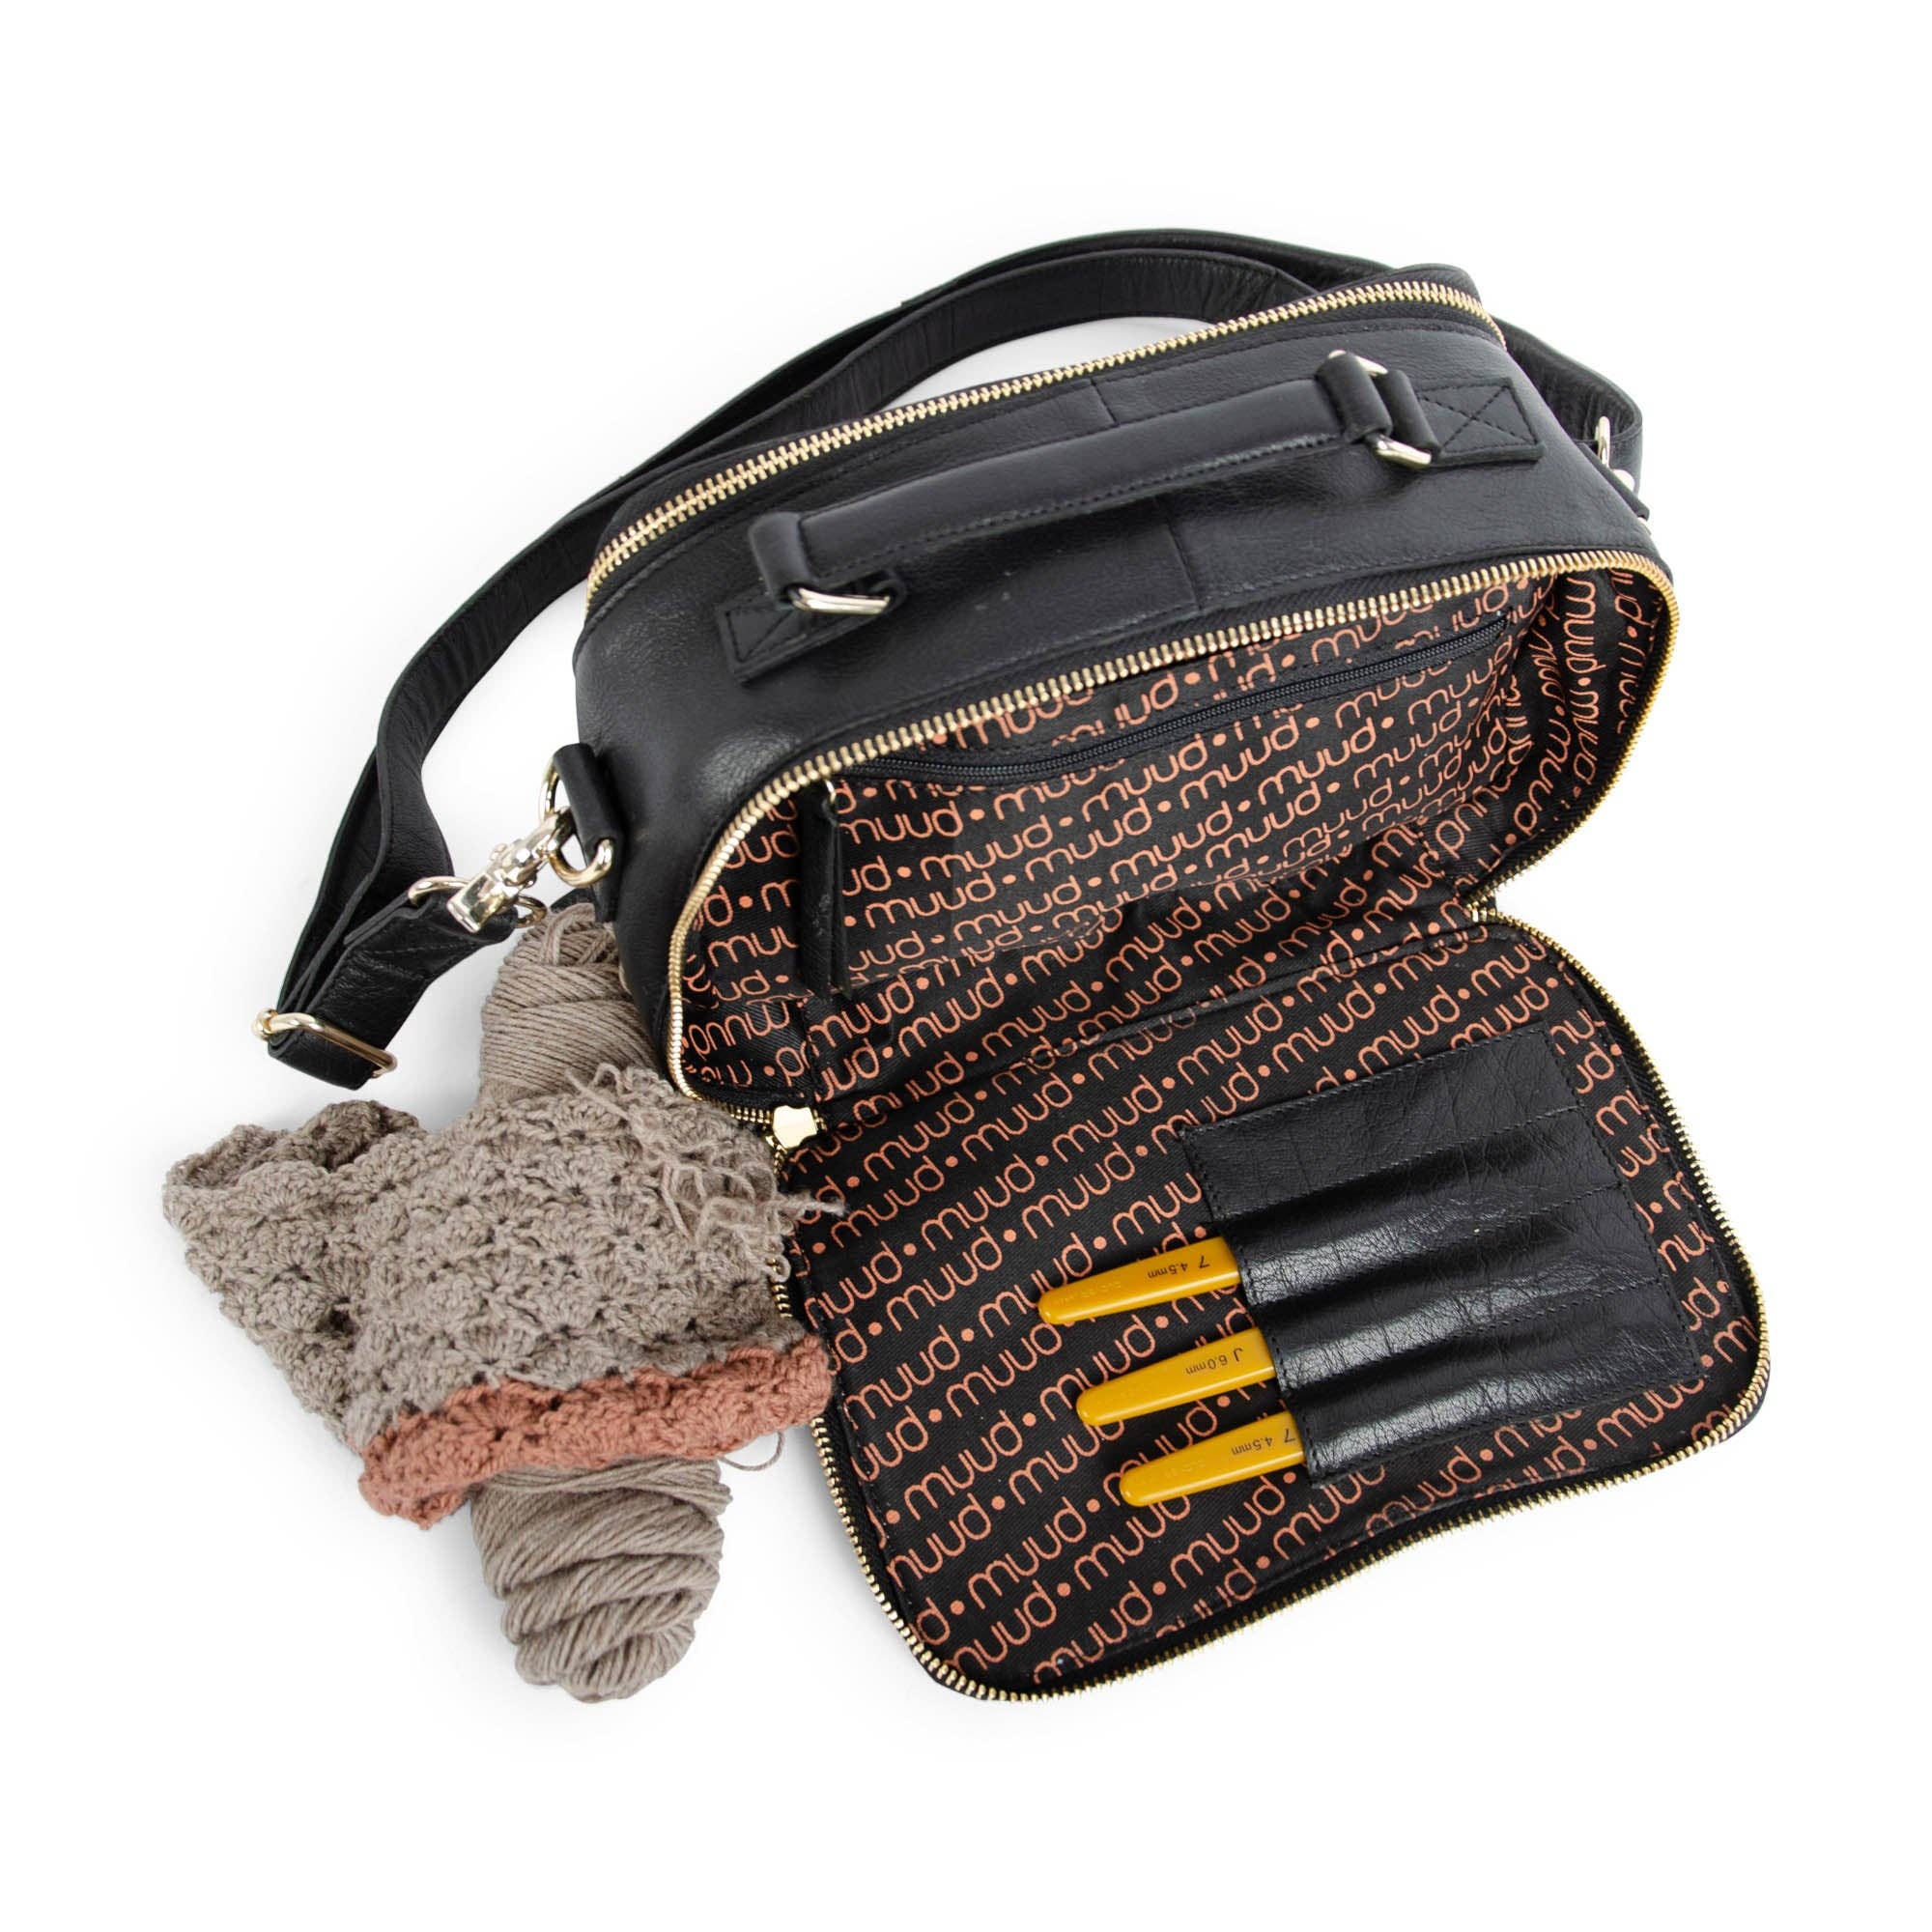 muud Heaven - Limited edition Leather Crochet Bag